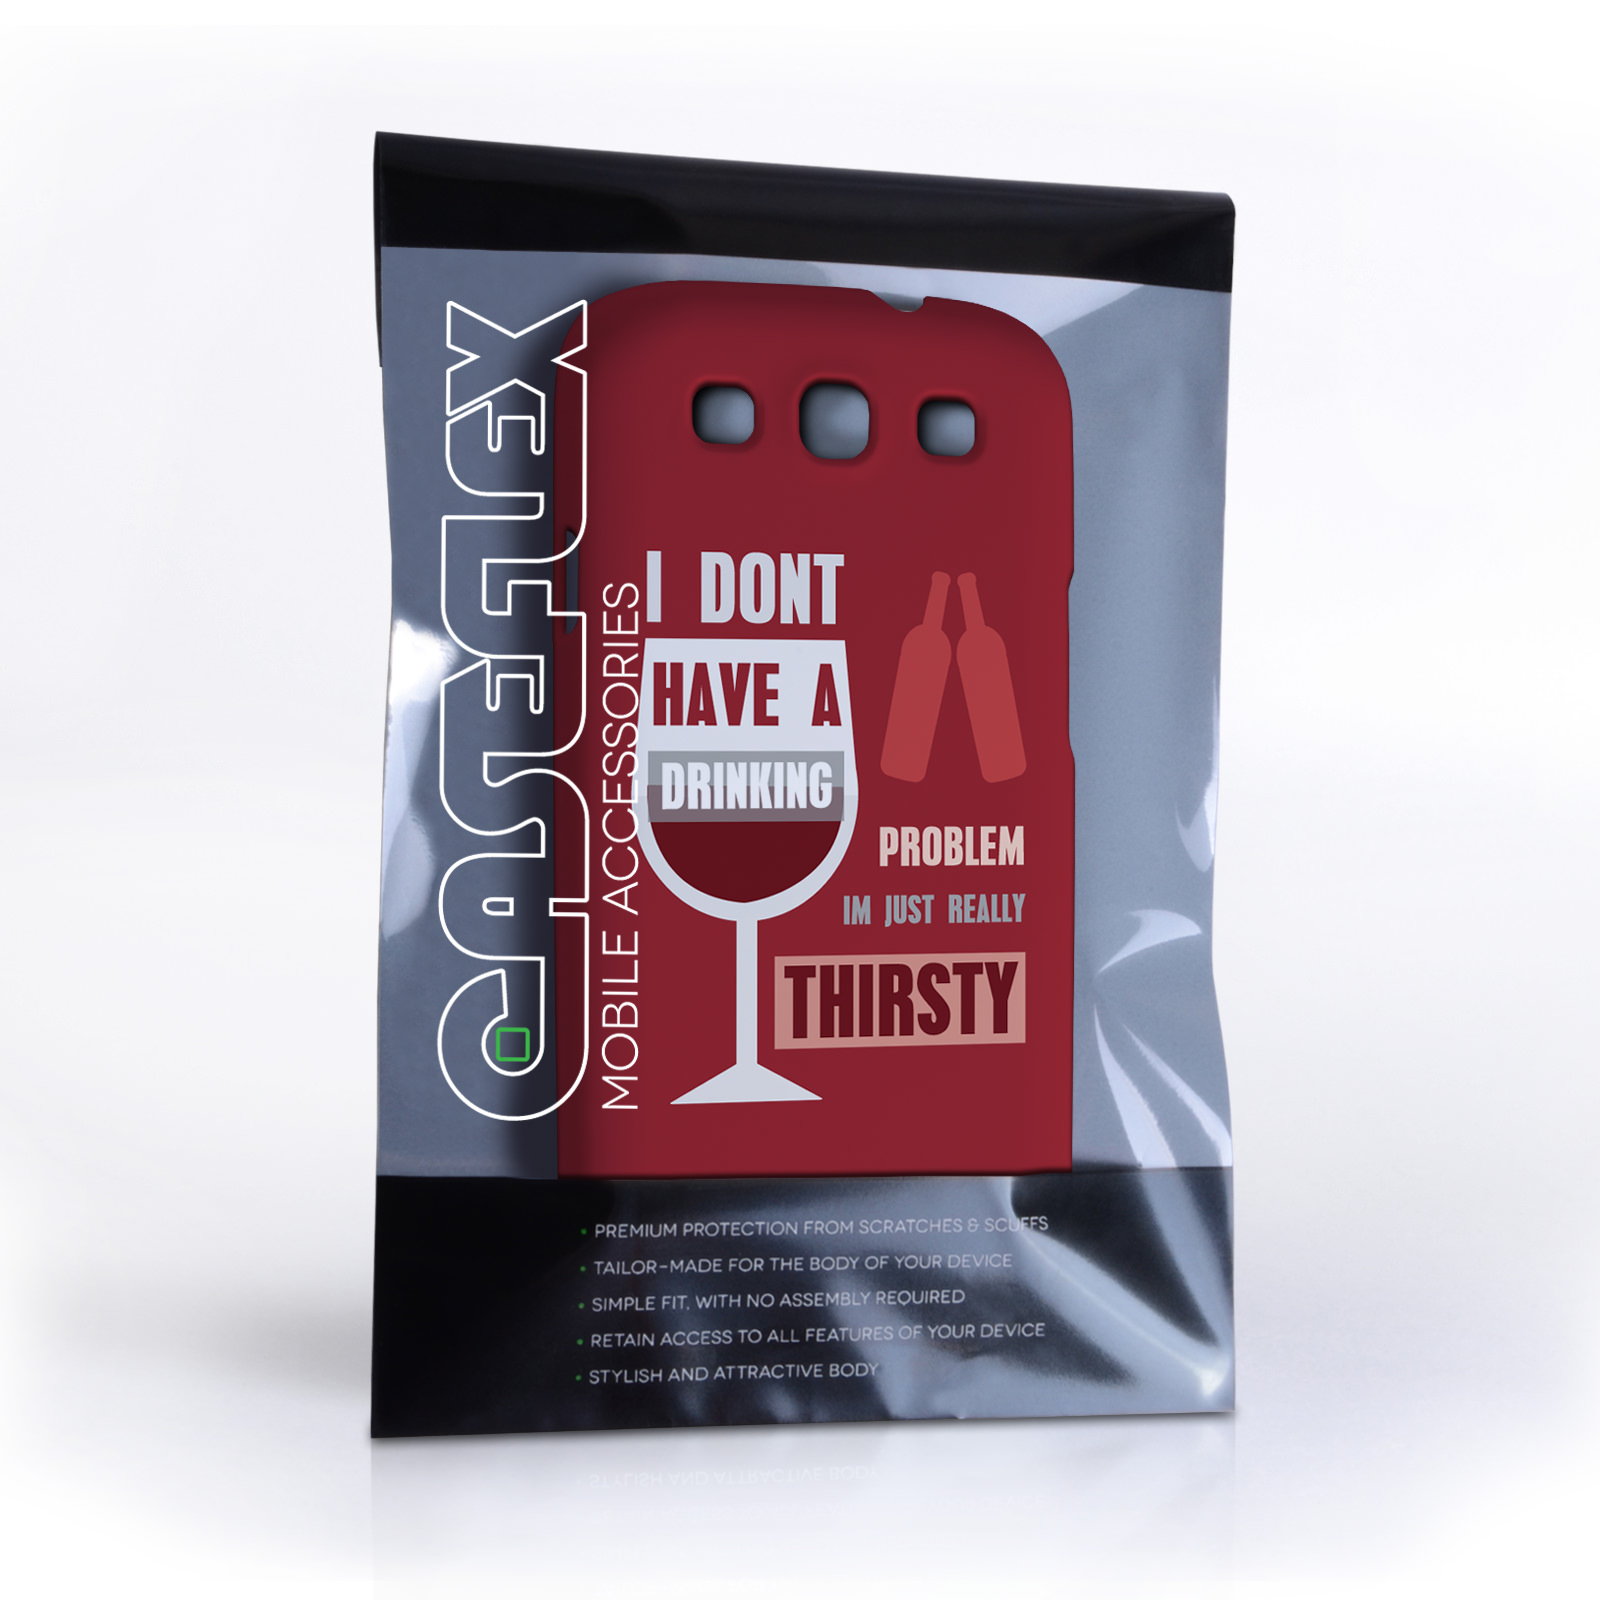 Caseflex Samsung Galaxy S3 ‘Really Thirsty’ Quote Hard Case – Red